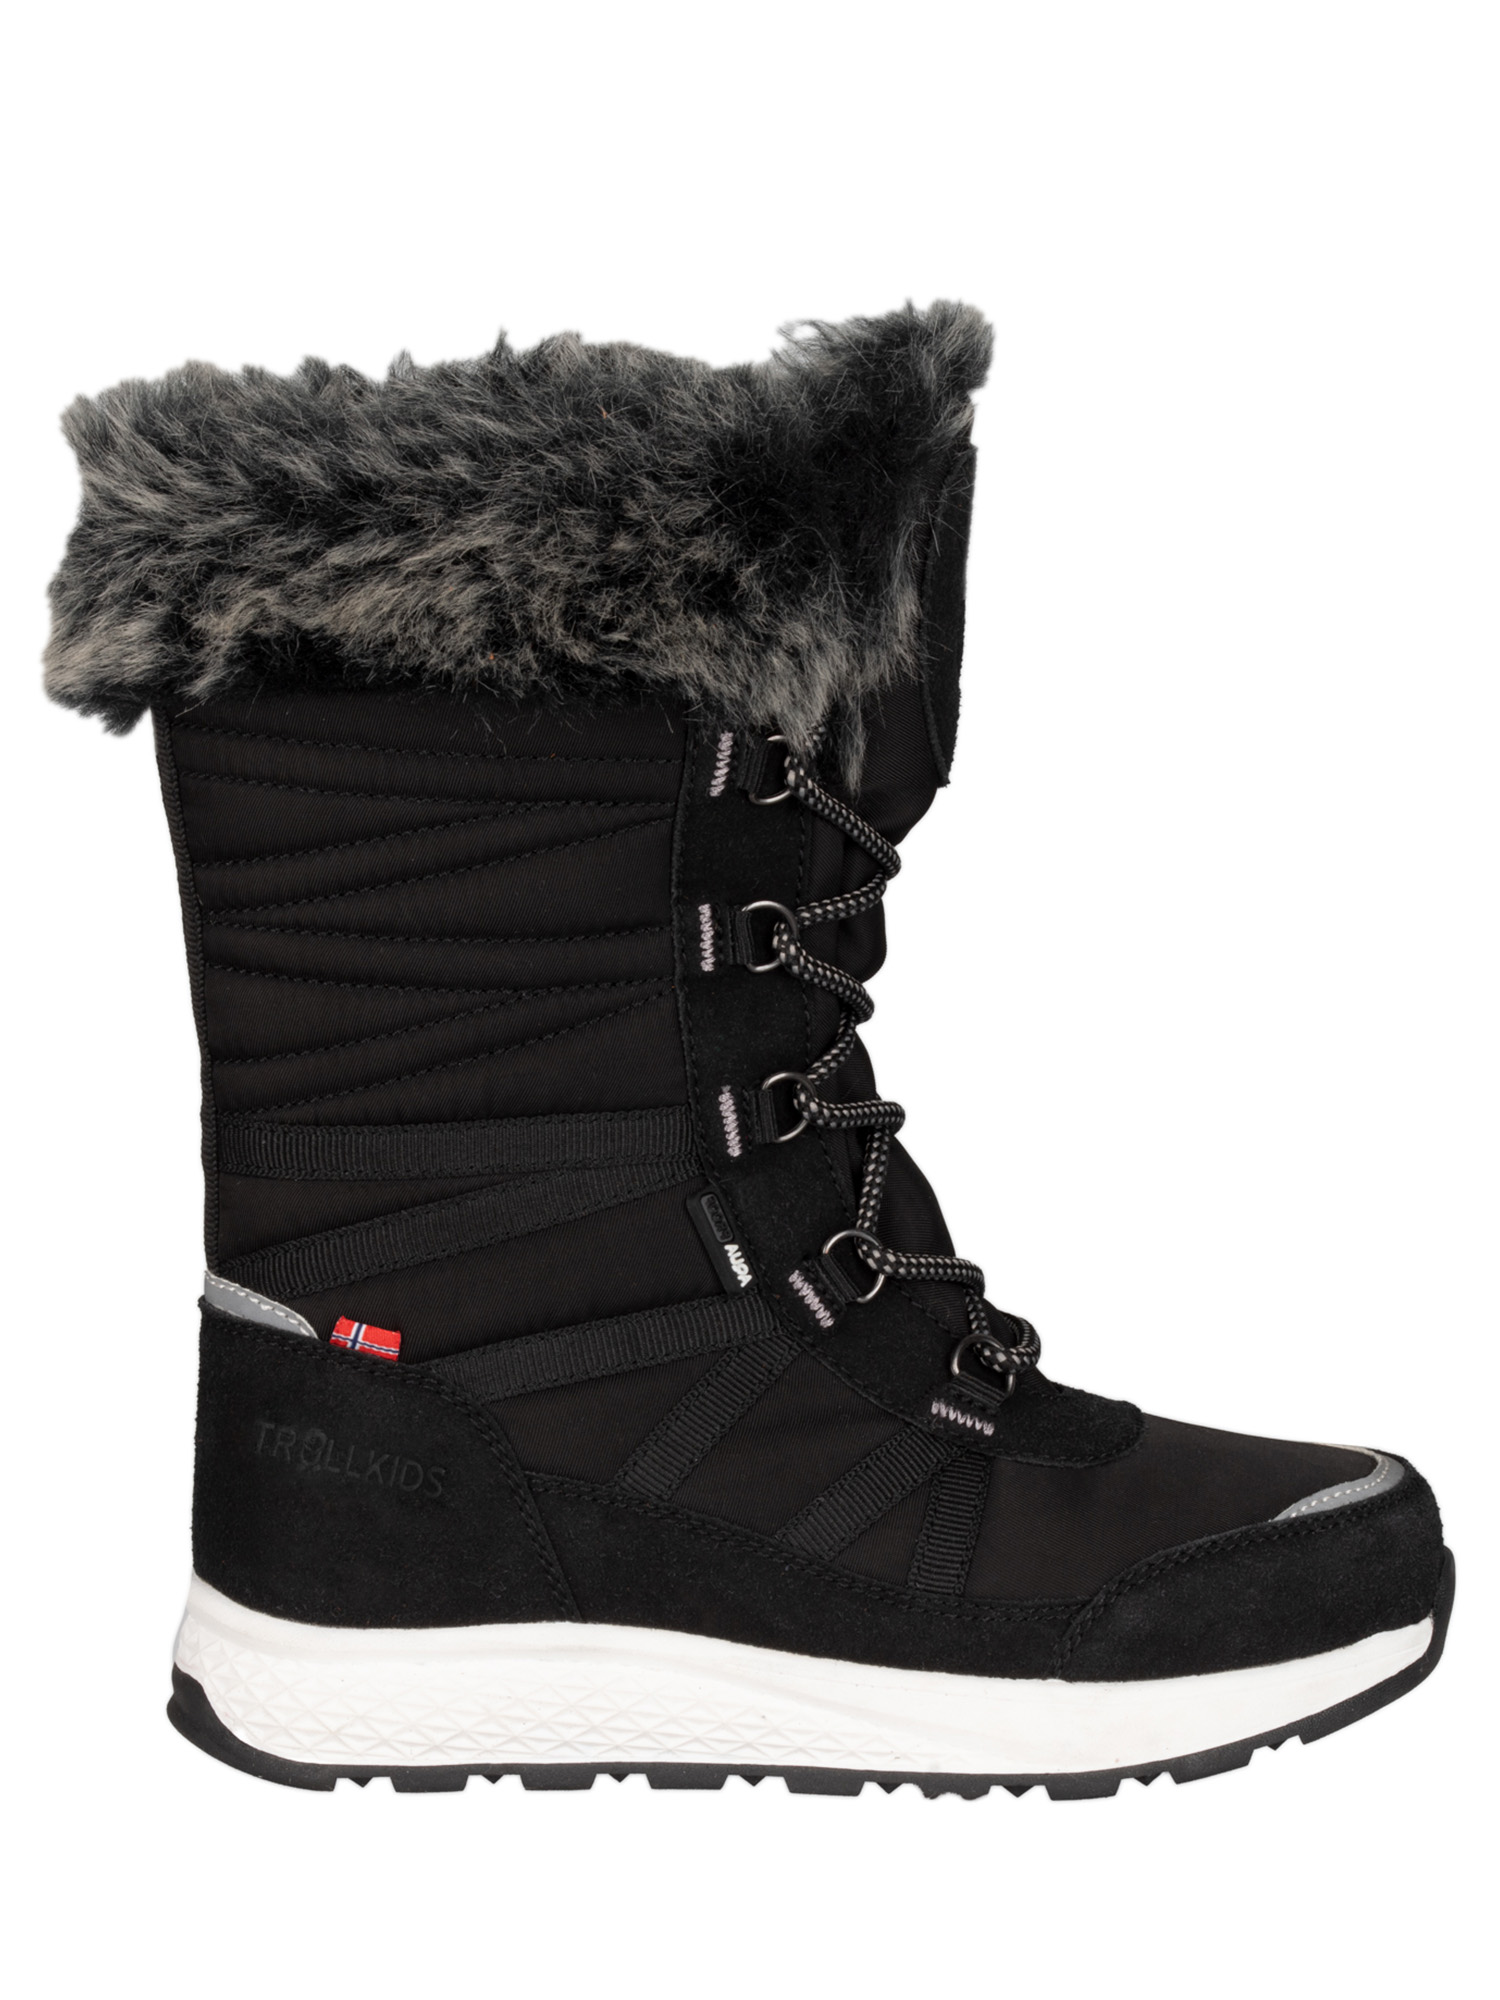 Ботинки Trollkids Girls Hemsedal Winter Boots Xt, черный, 36